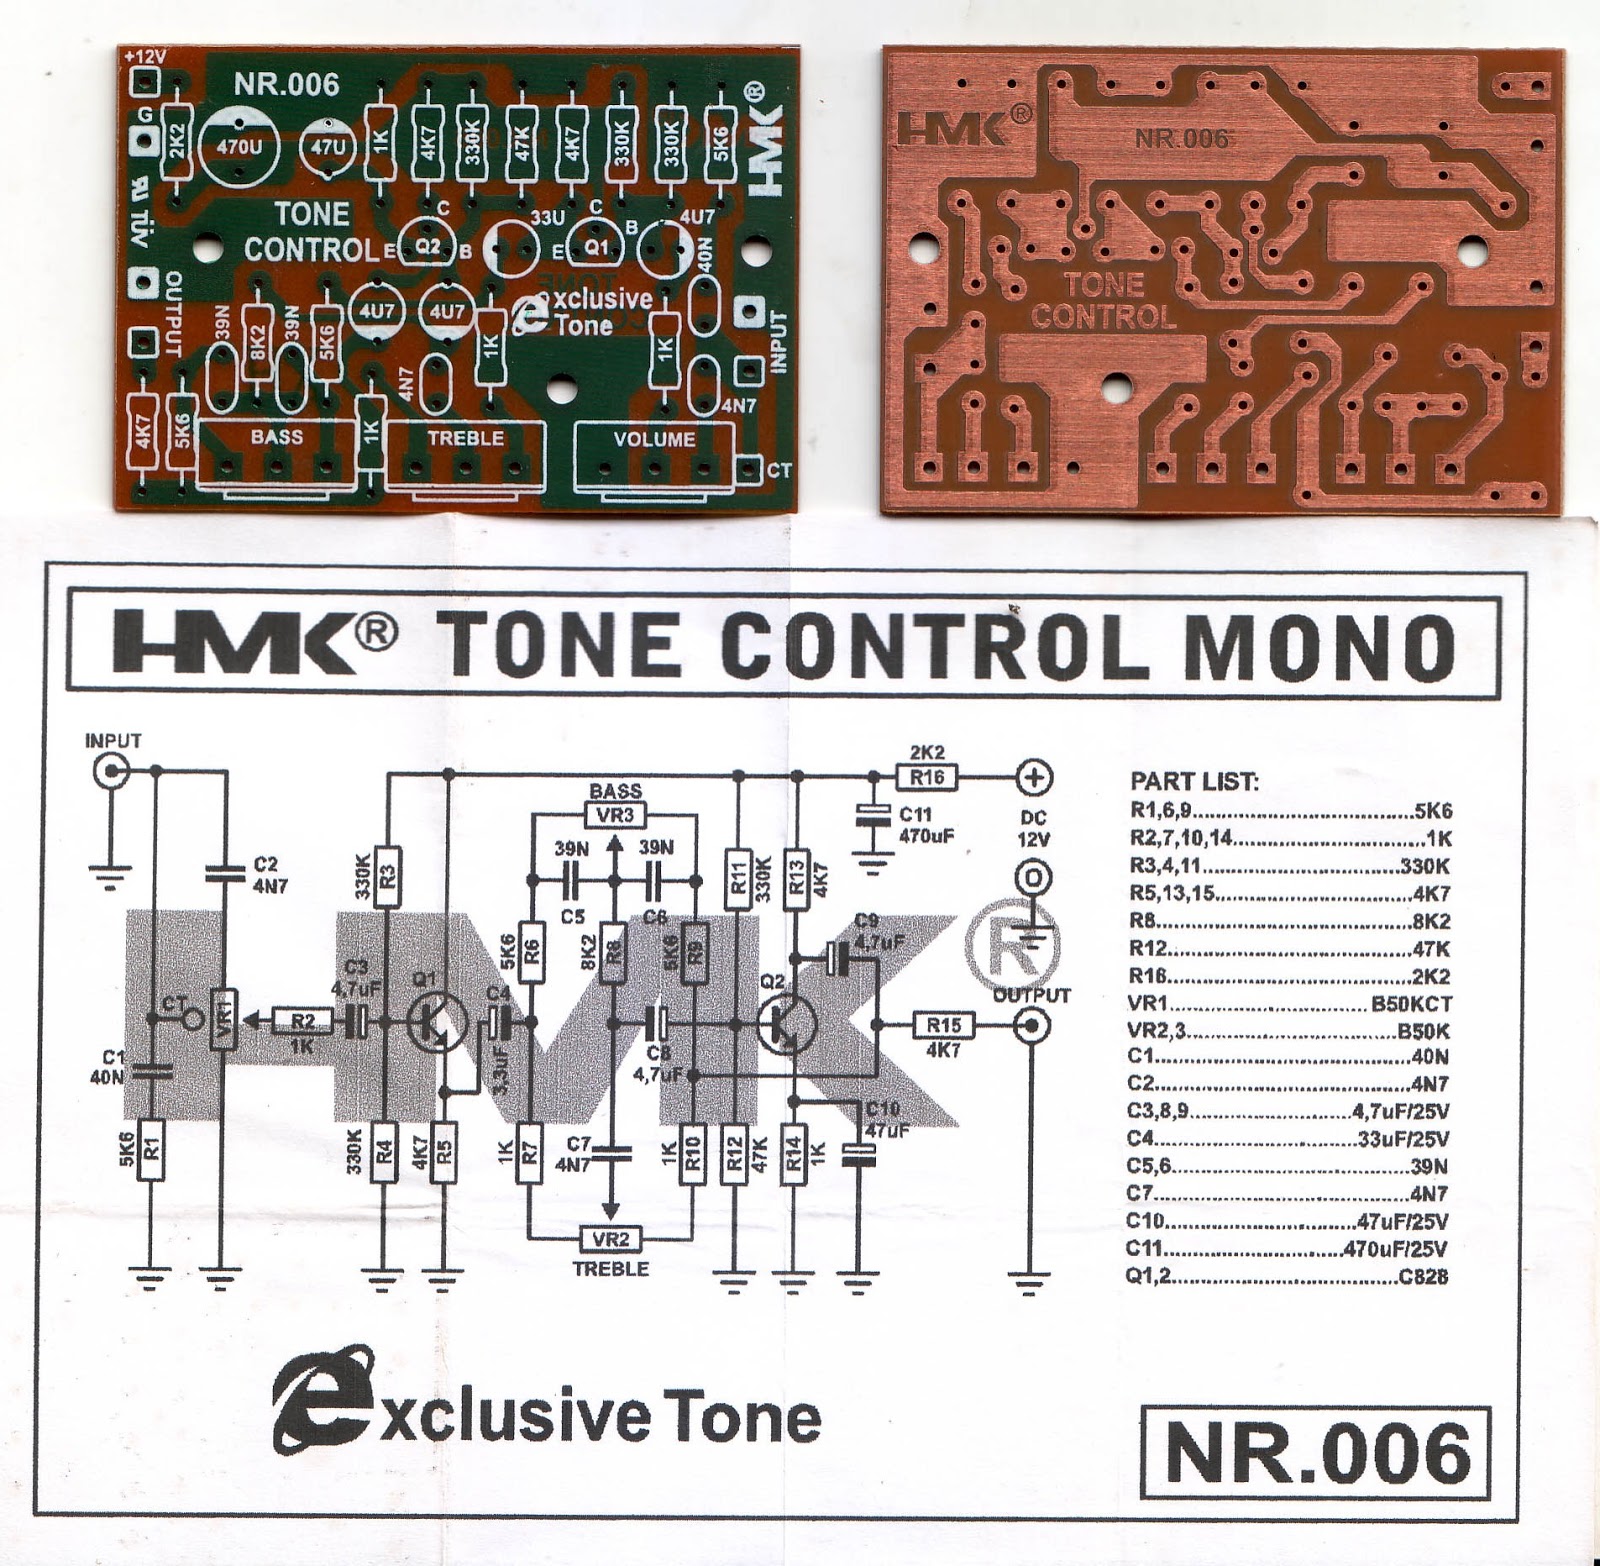 Tone control. TBX Tone Control. One knob Tone Control circuit. Tone Control Douglas self. Porter в.е. Tone Control. -Wireless World. 1984. Volume 90, №1576. P. 73..